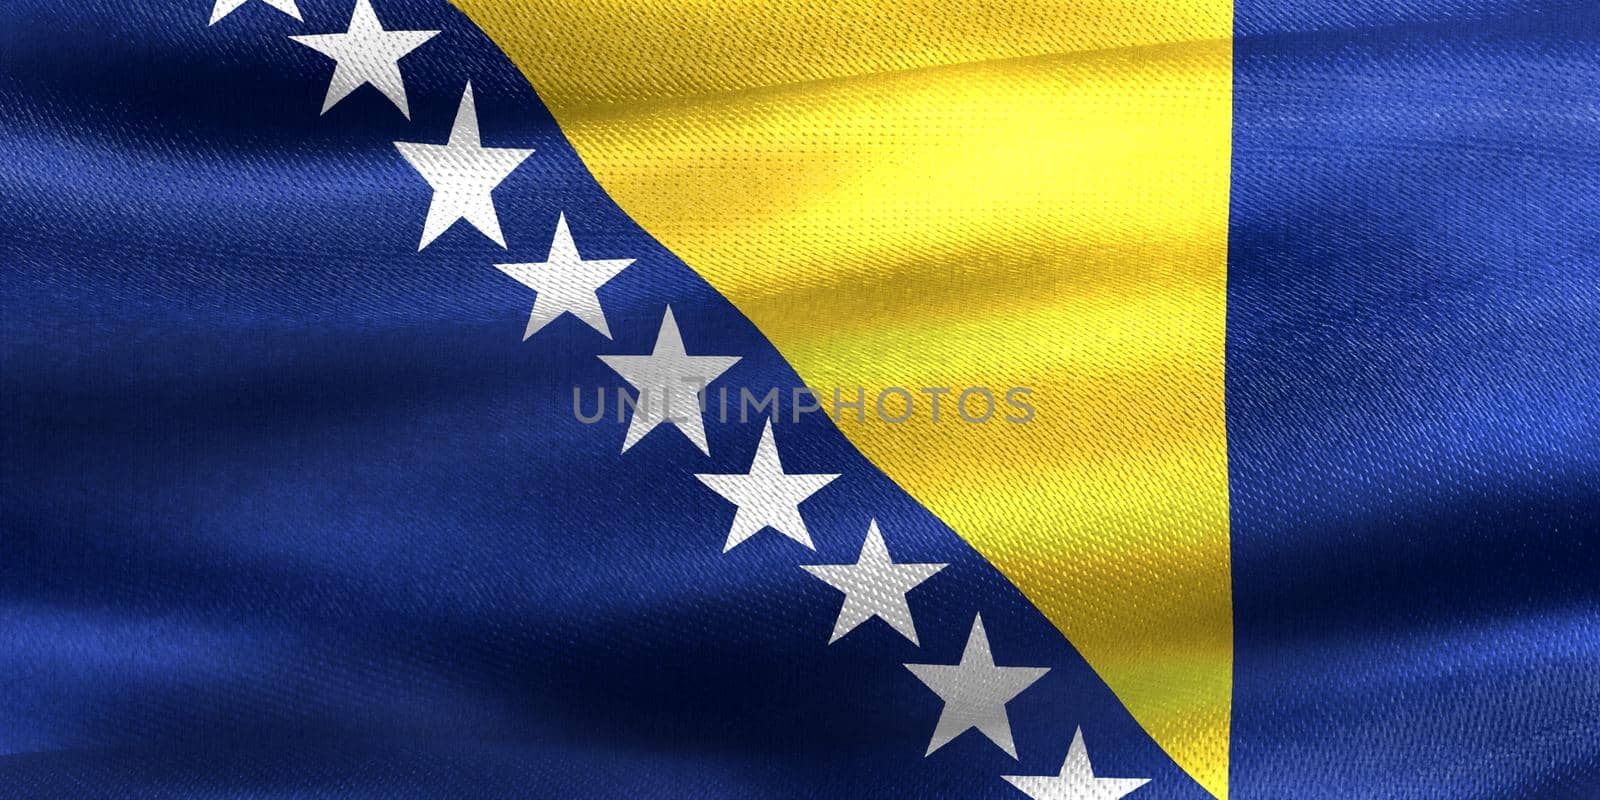 Bosnia and Herzegovina flag - realistic waving fabric flag by MP_foto71